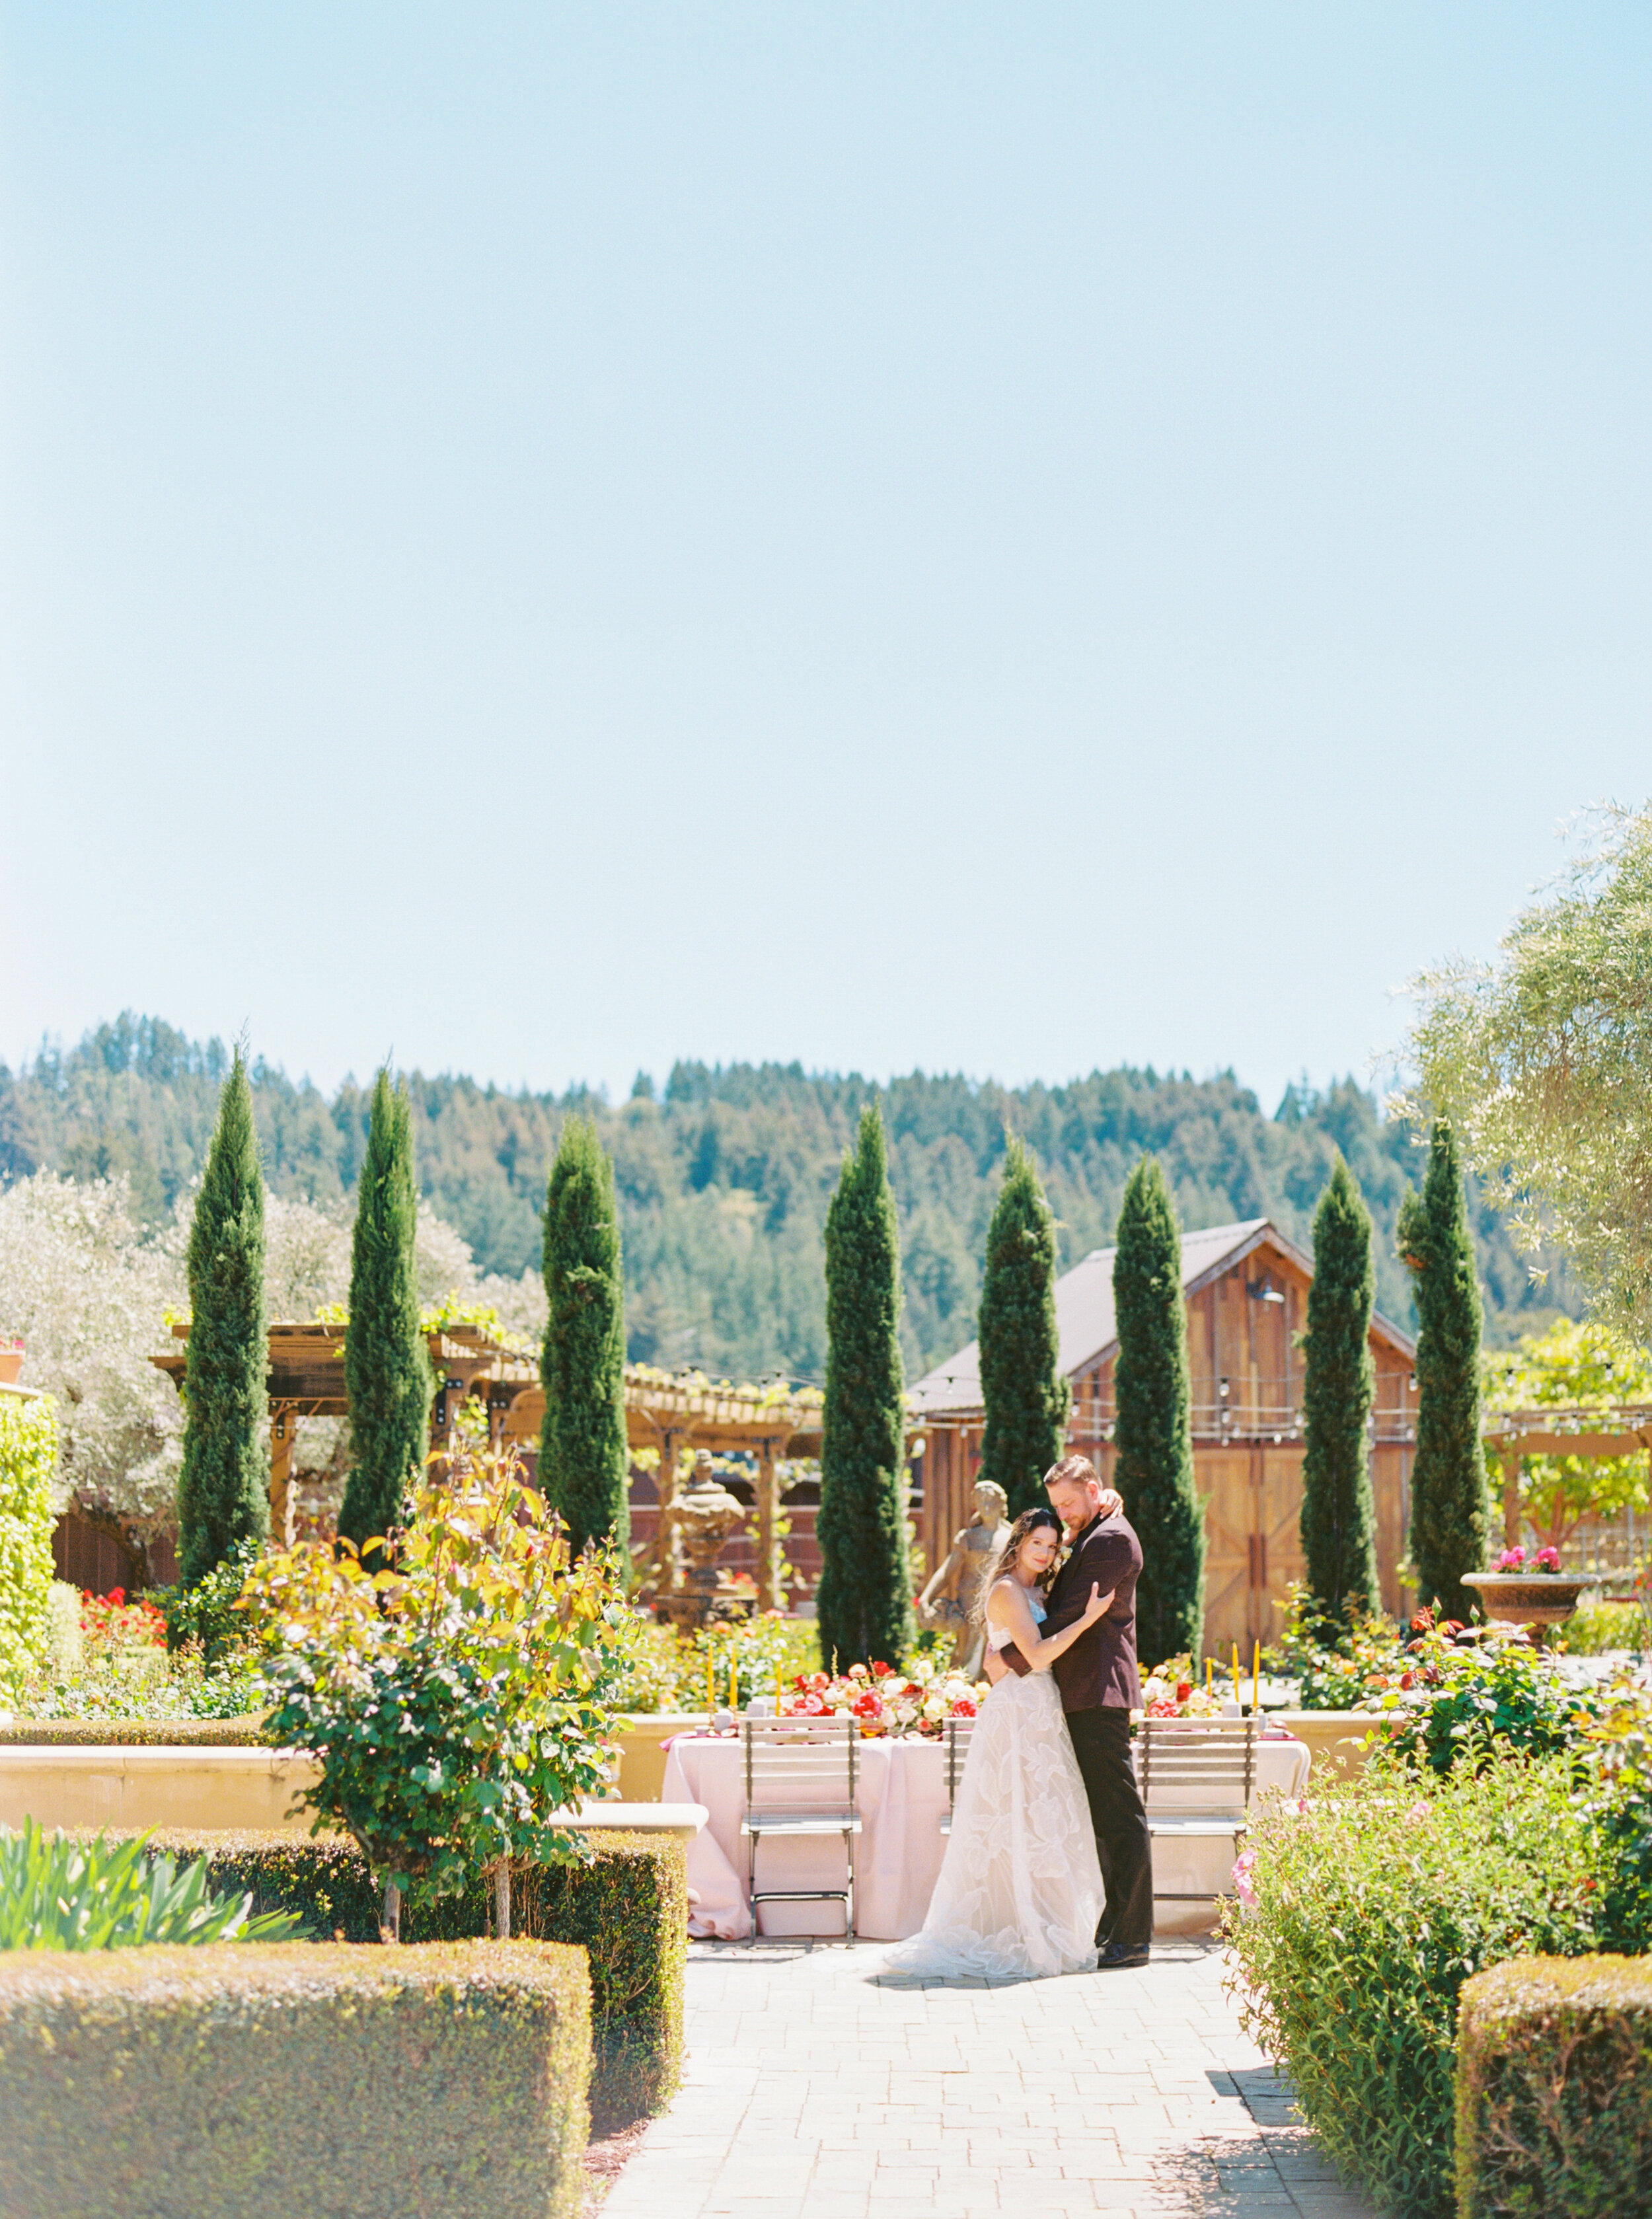 Regale Winery and Vineyards Wedding - Sarahi Hadden Photography-435.jpg